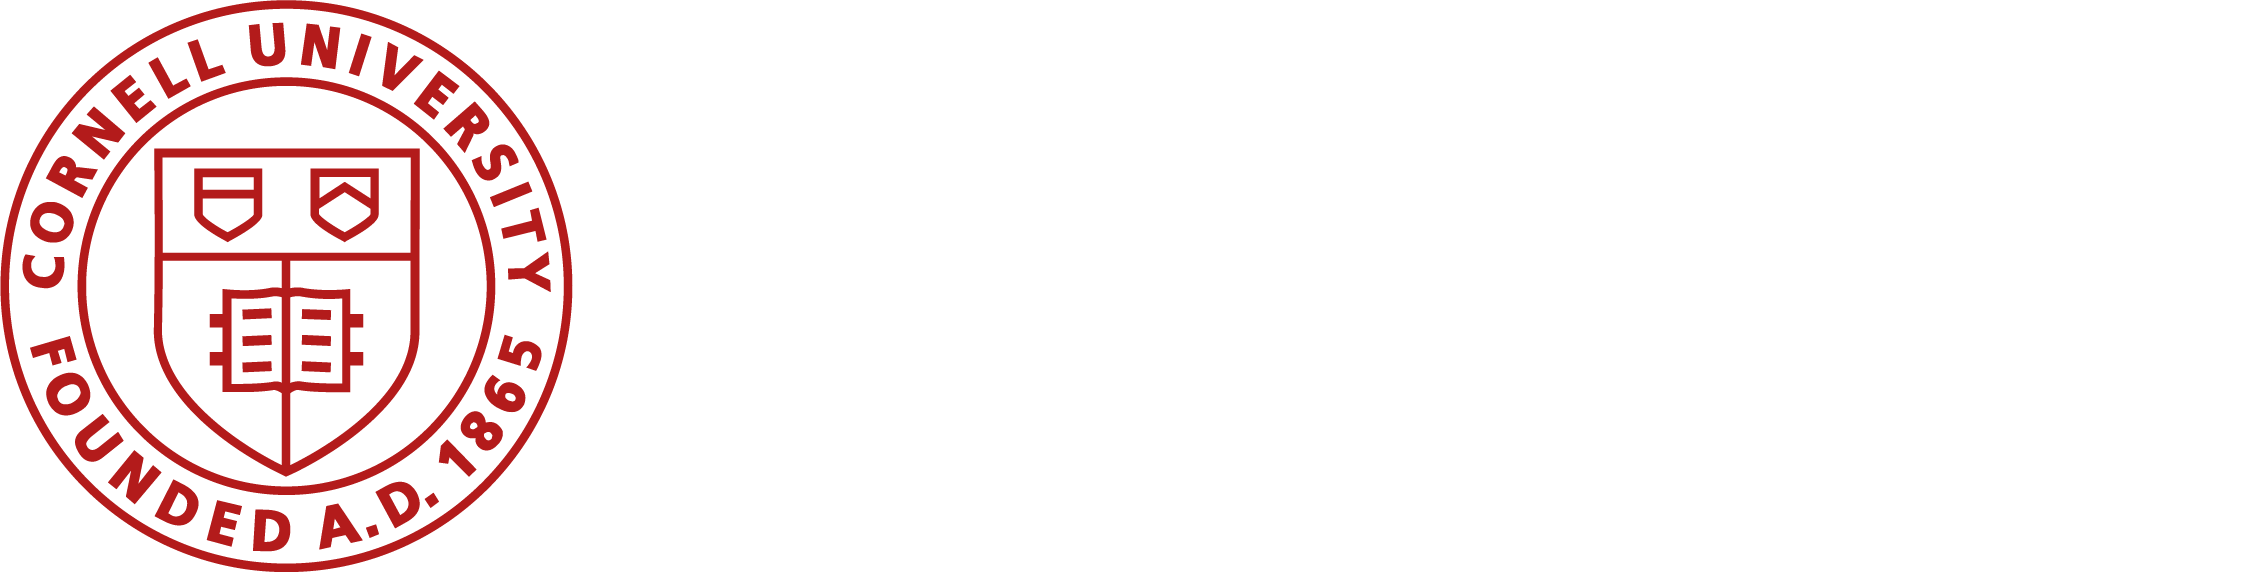 Cornell seal logo